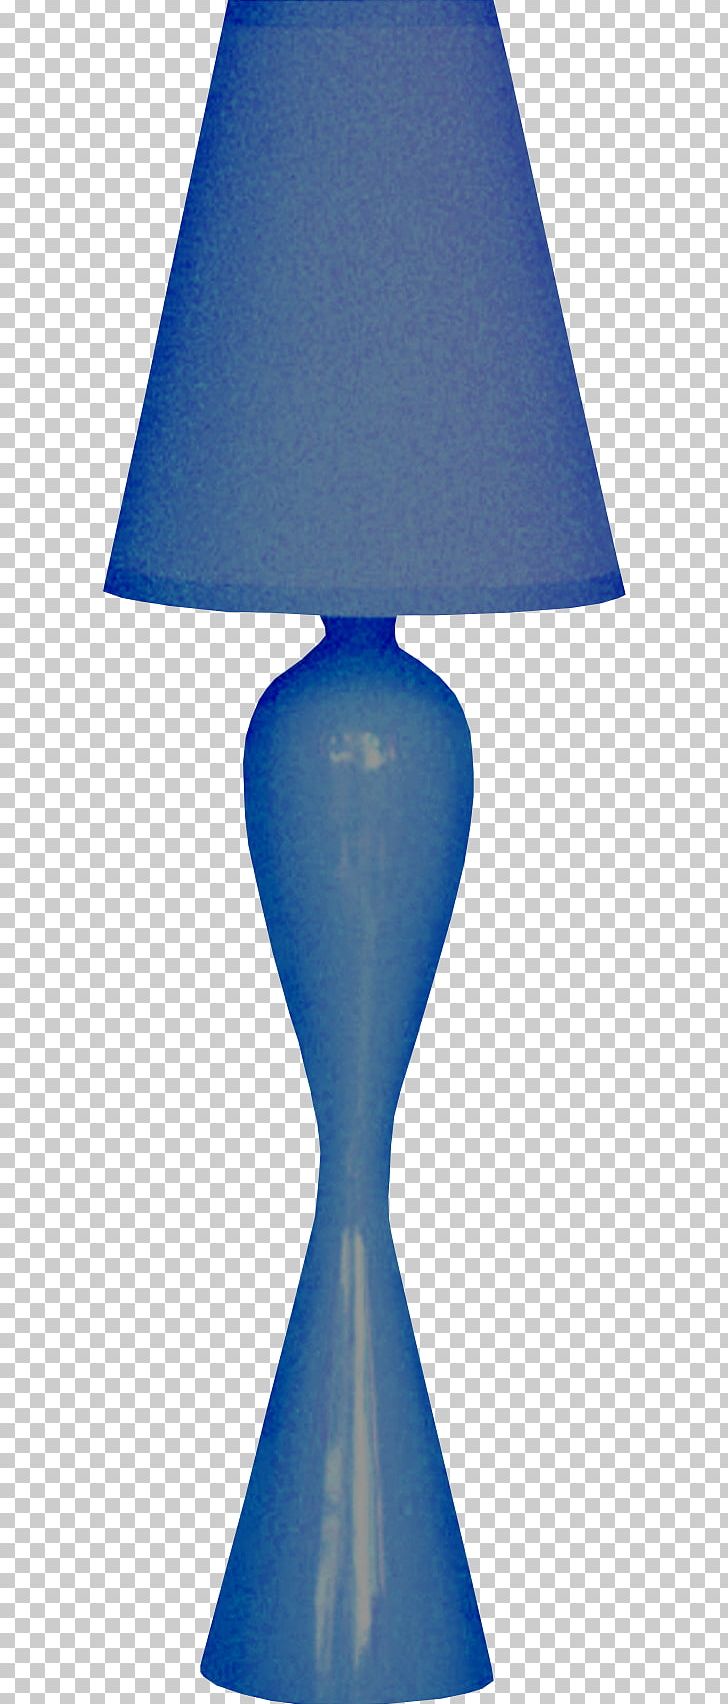 Light Blue Lampe De Bureau PNG, Clipart, Bedside Lamp, Black, Blue, Blue Abstract, Blue Background Free PNG Download